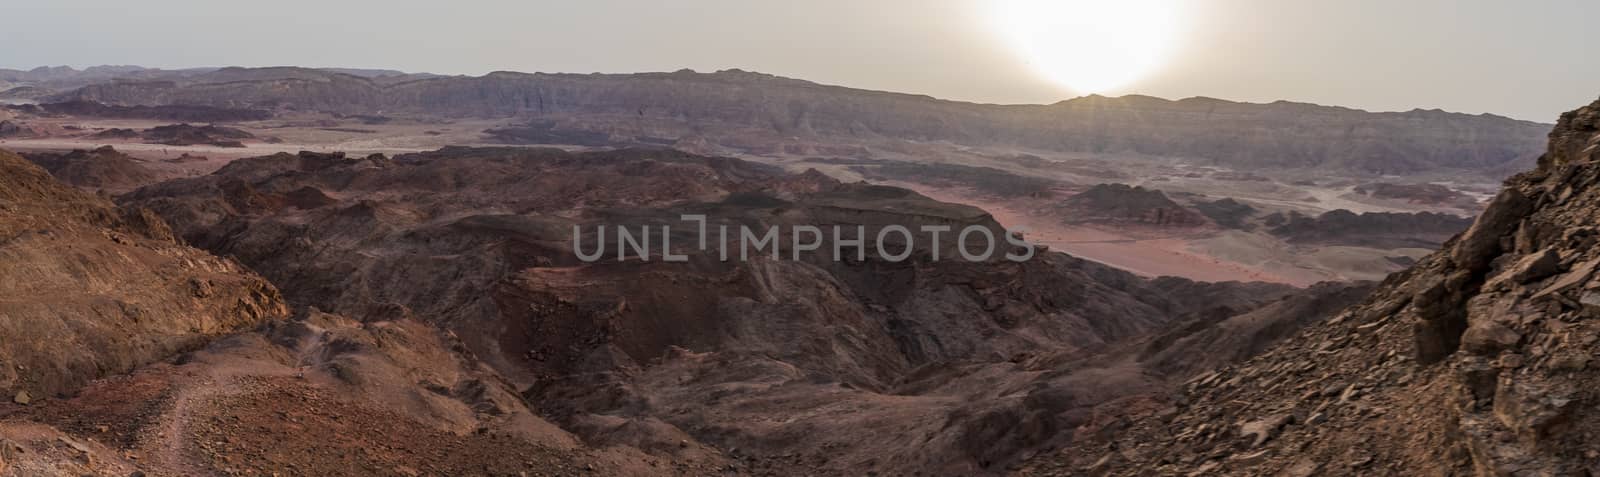 Travel in Timna park of Arava desert Israel by javax